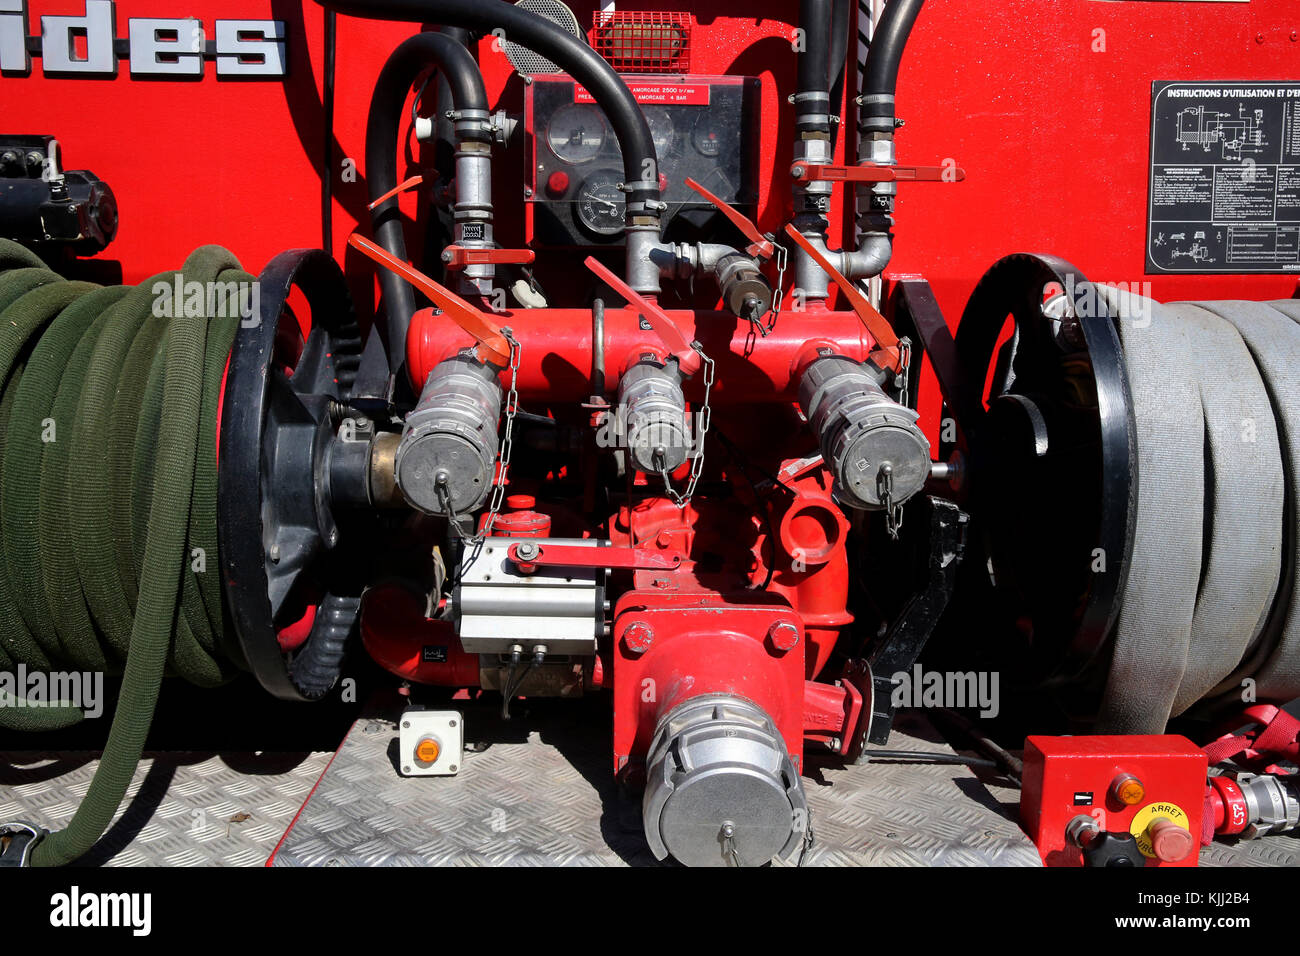 Fire truck.   Sprinkler system. France. Stock Photo